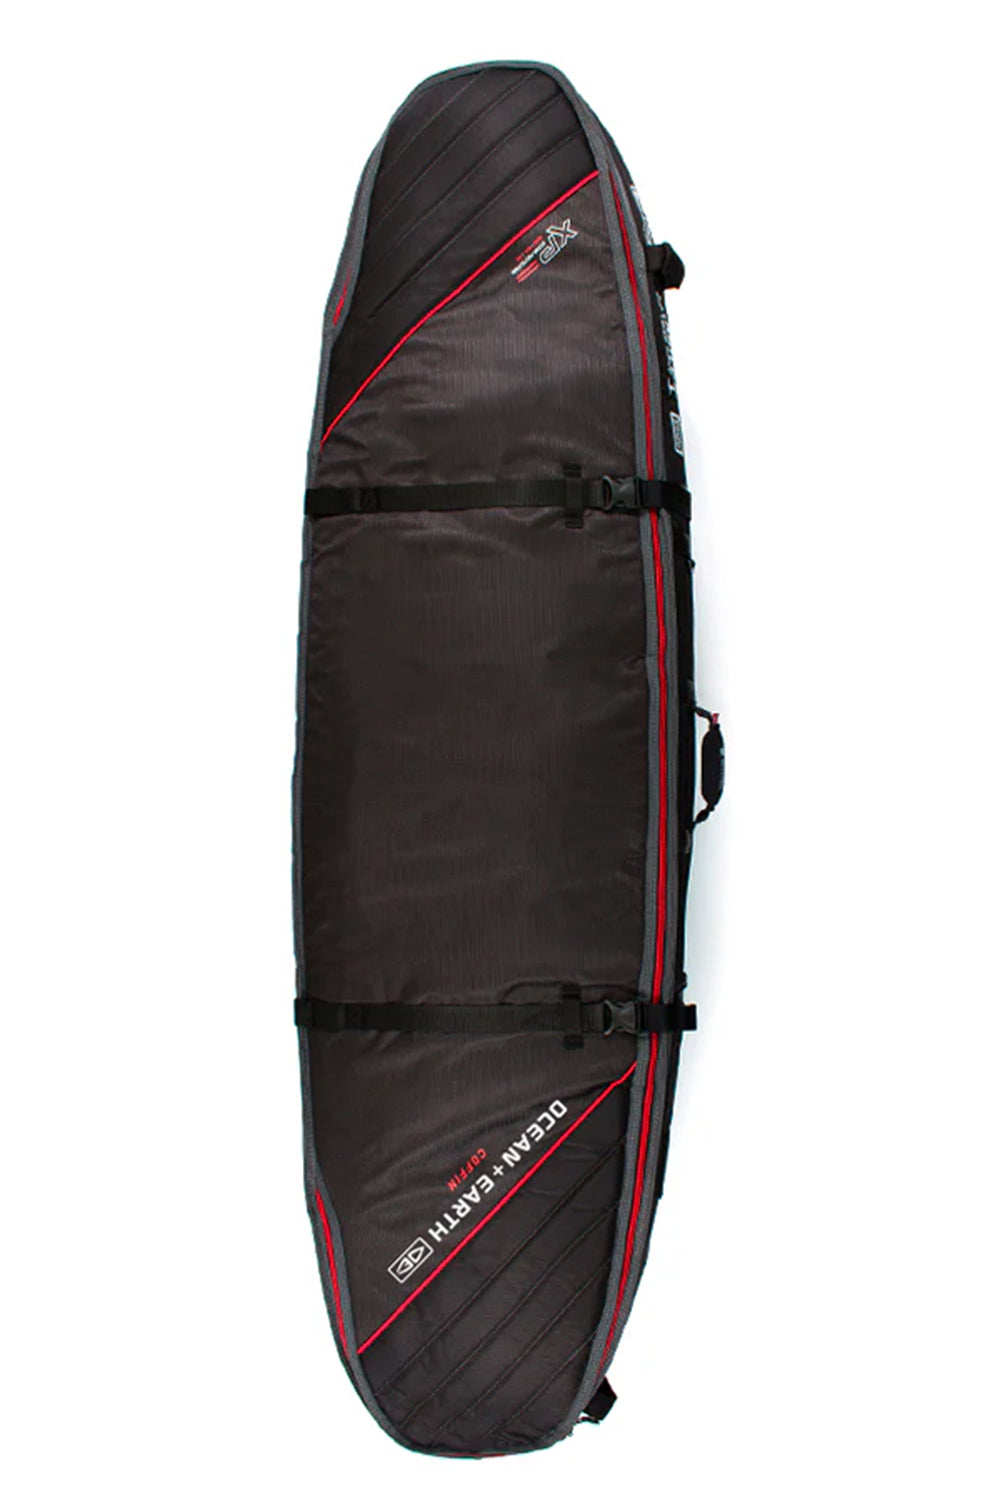 Ocean & Earth Quad Coffin Shortboard Cover Black/Red - 7'6"